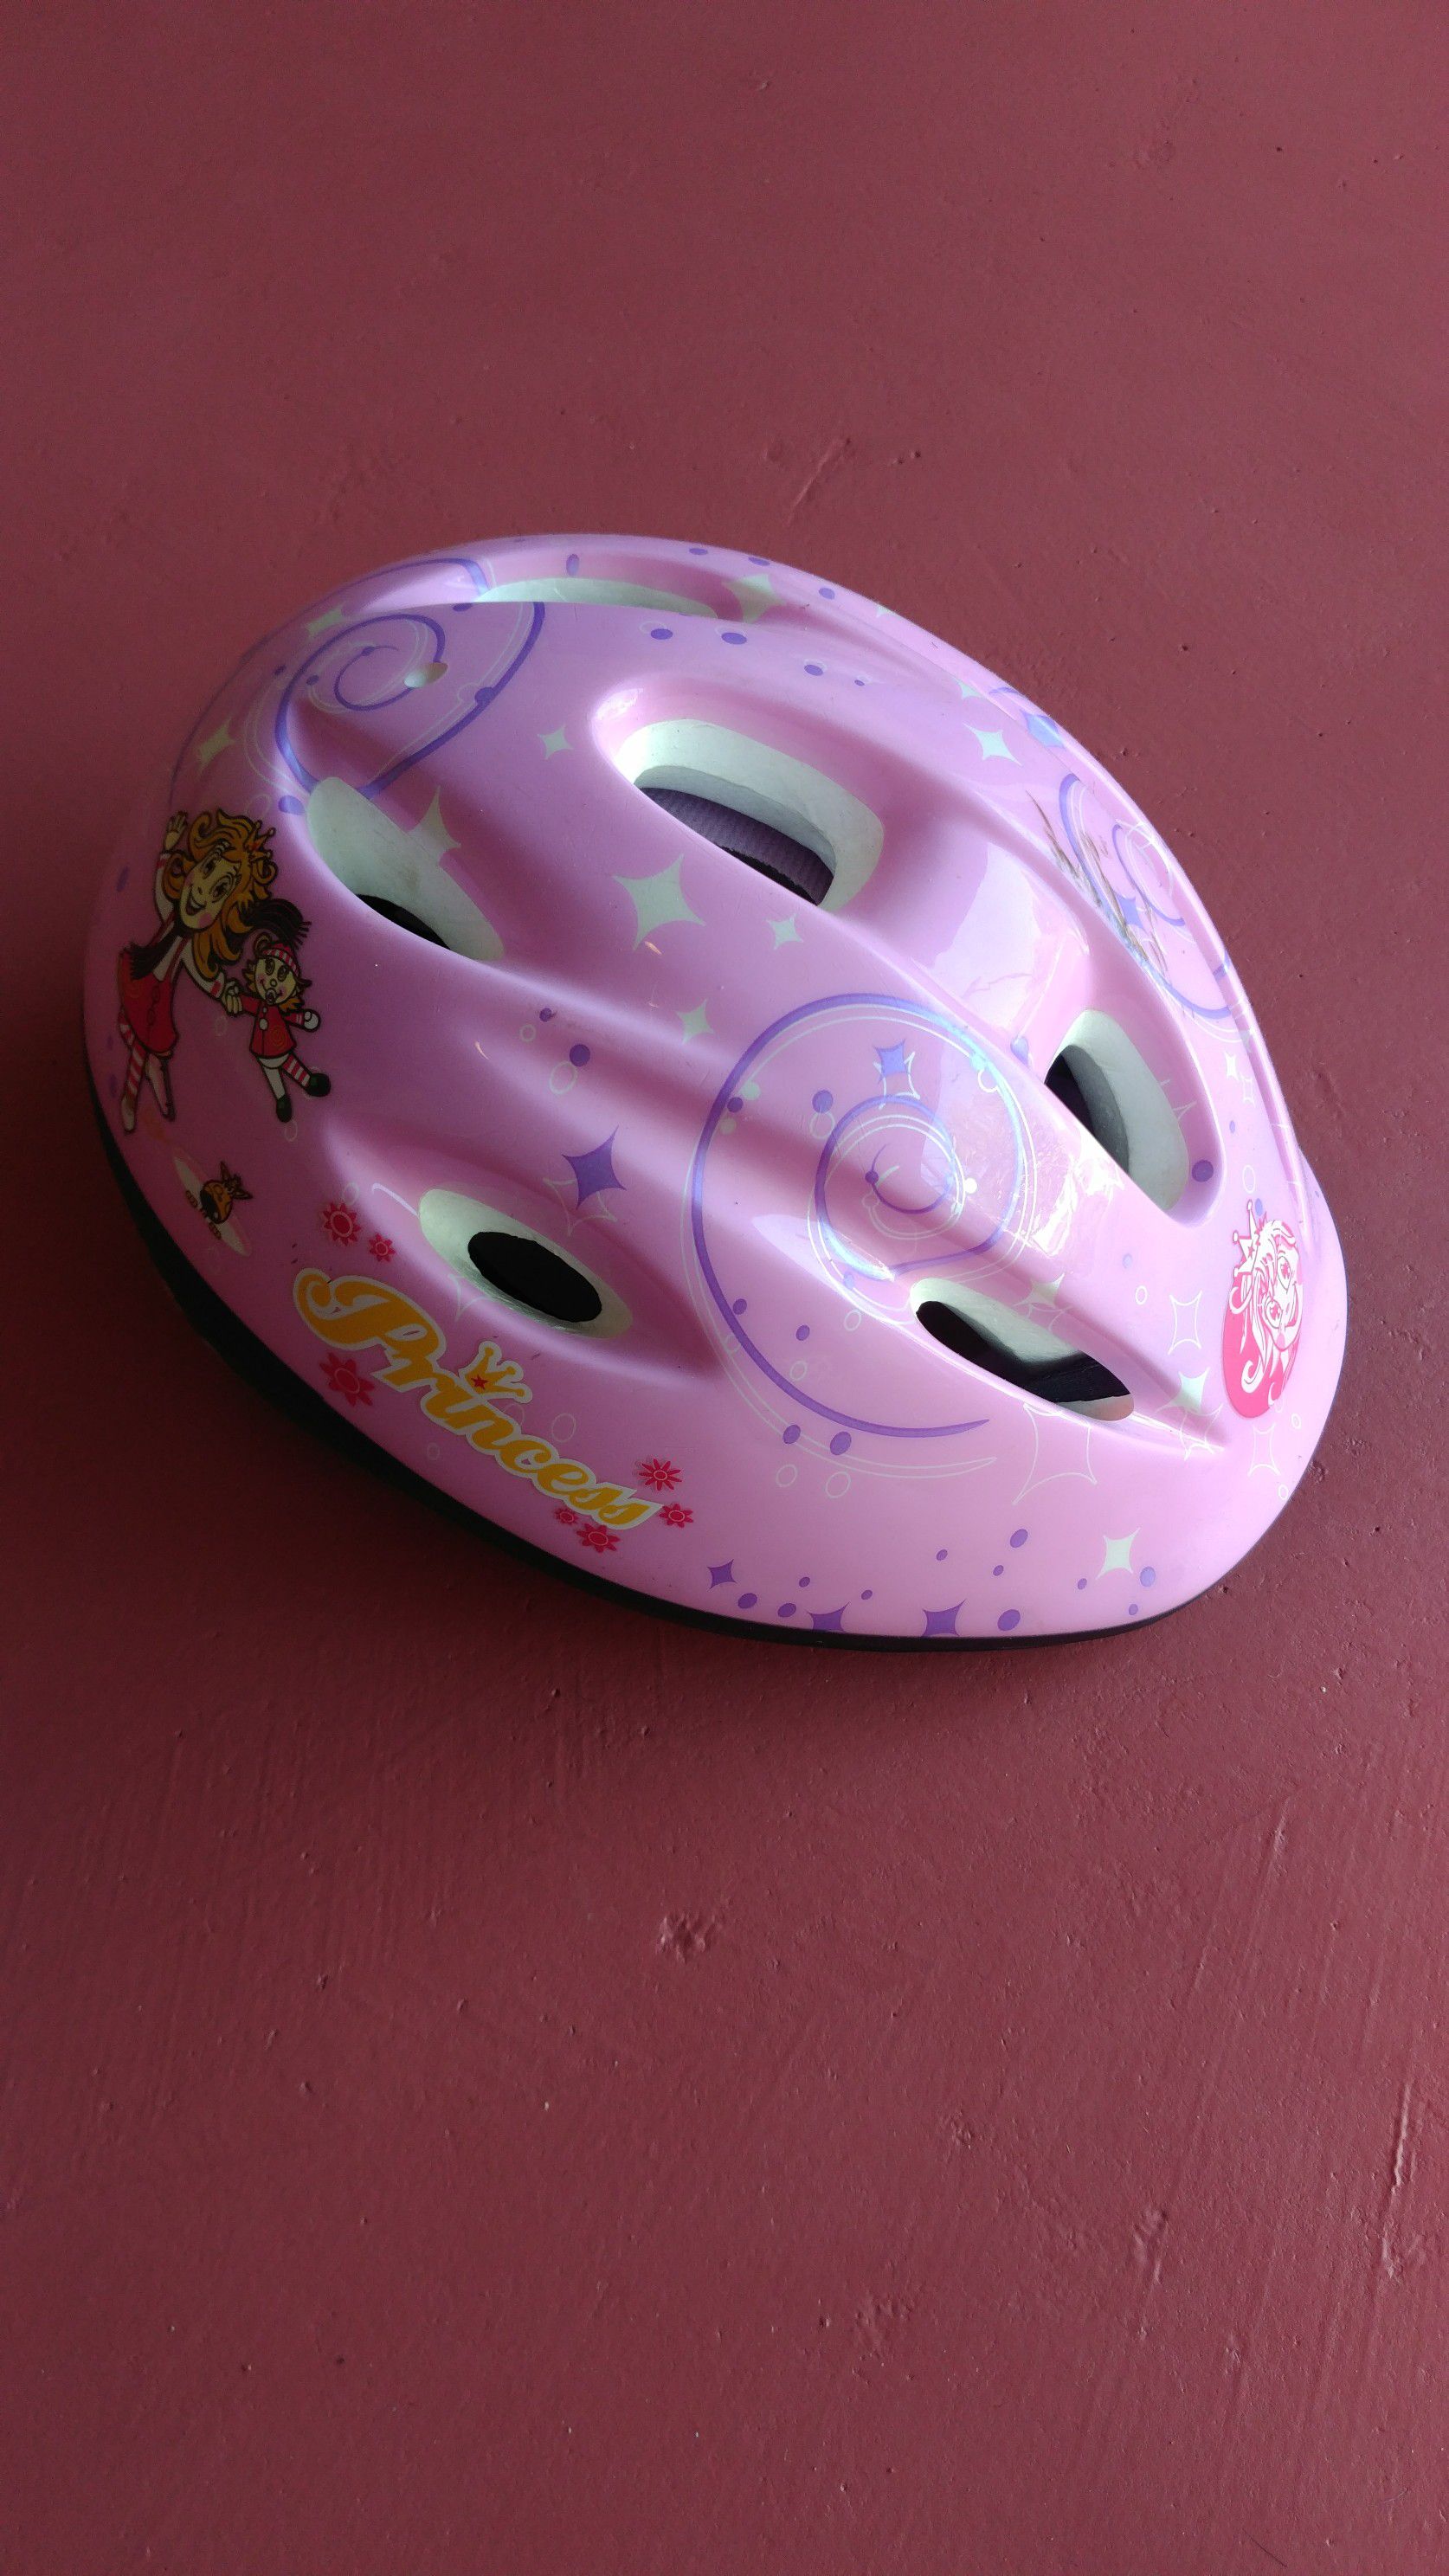 Bicycle helmet for girls